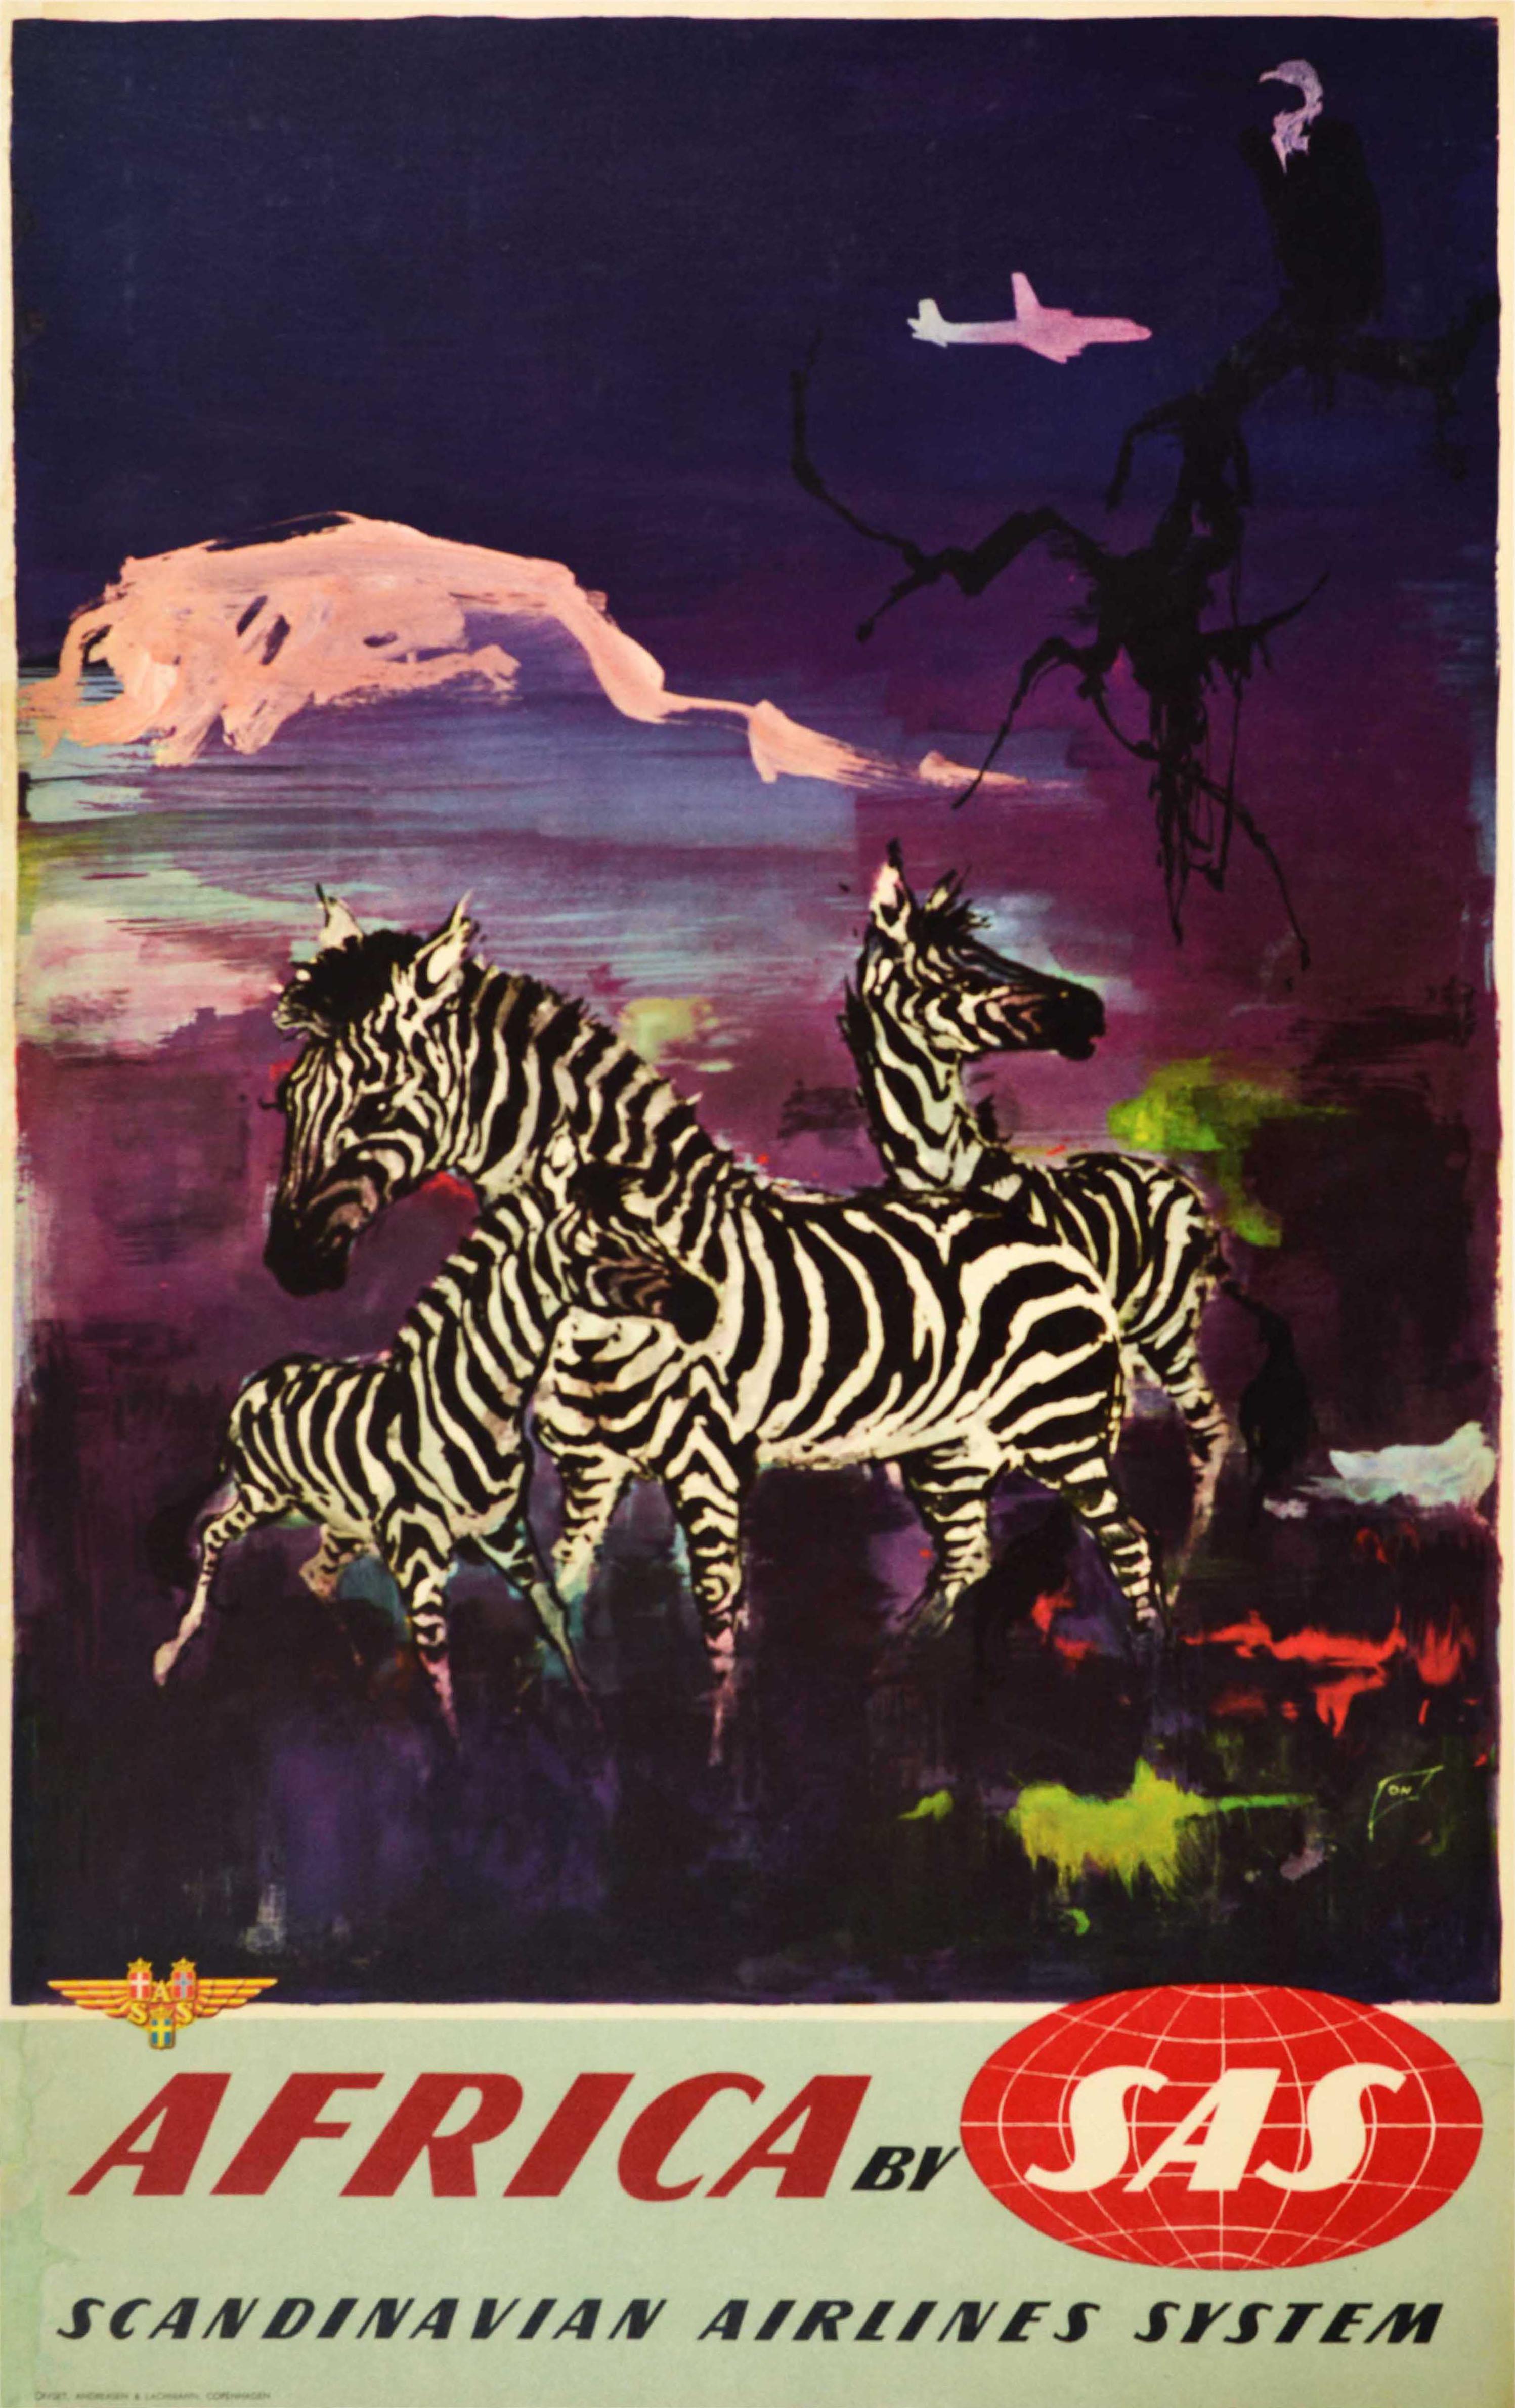 Otto Nielsen Print - Original Vintage Travel Poster Africa SAS Scandinavian Airlines System Zebra Art